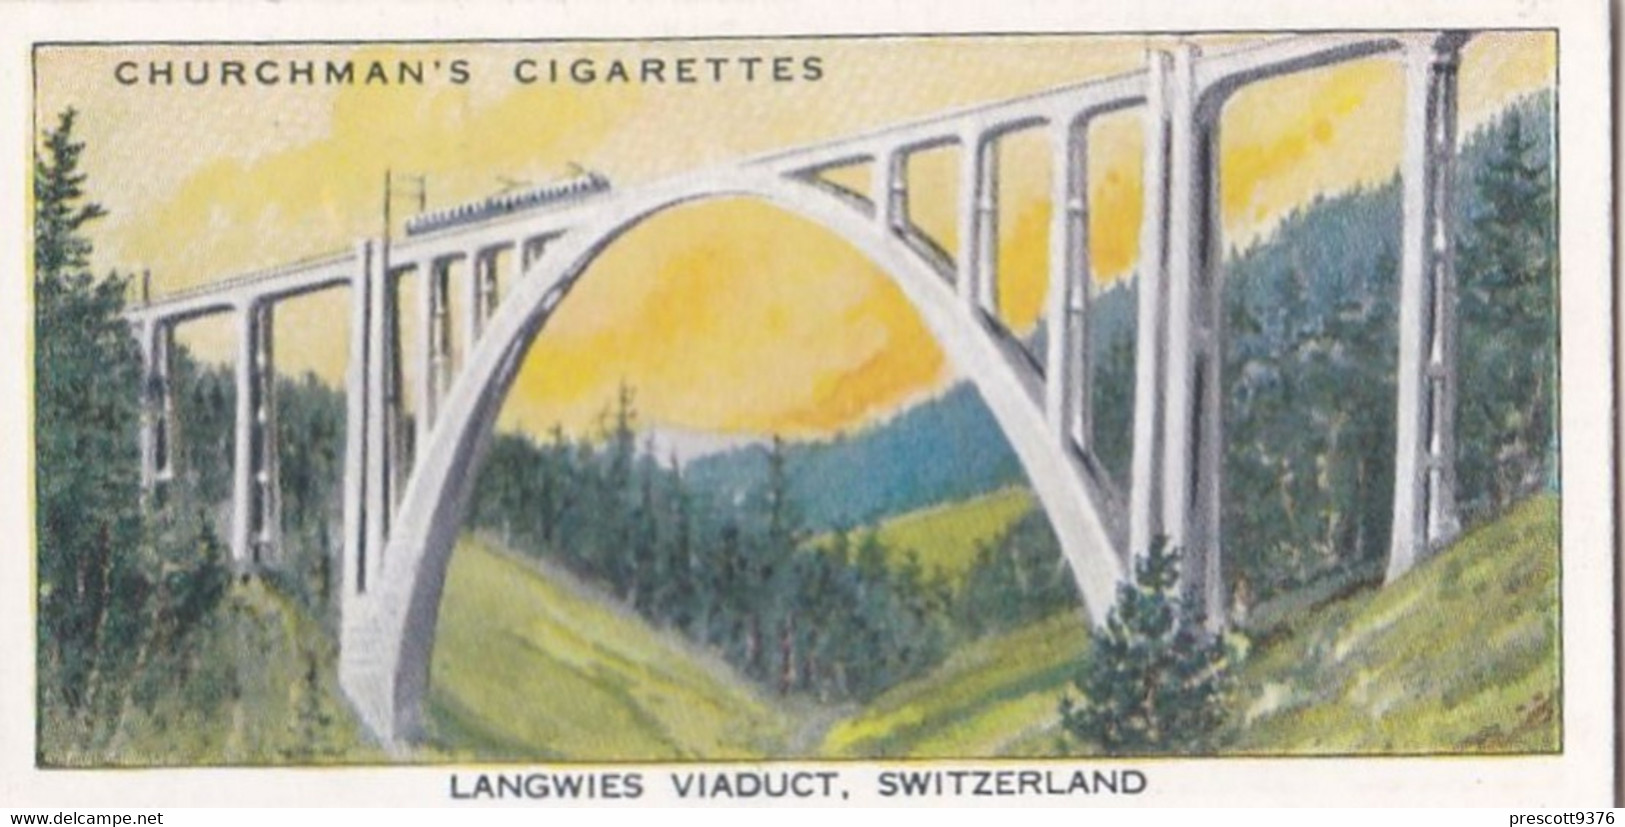 Wonderful Railway Travel, 1937 - 35 Langwies Viaduct, Switzerland  - Churchman Cigarette Card - Trains - Churchman